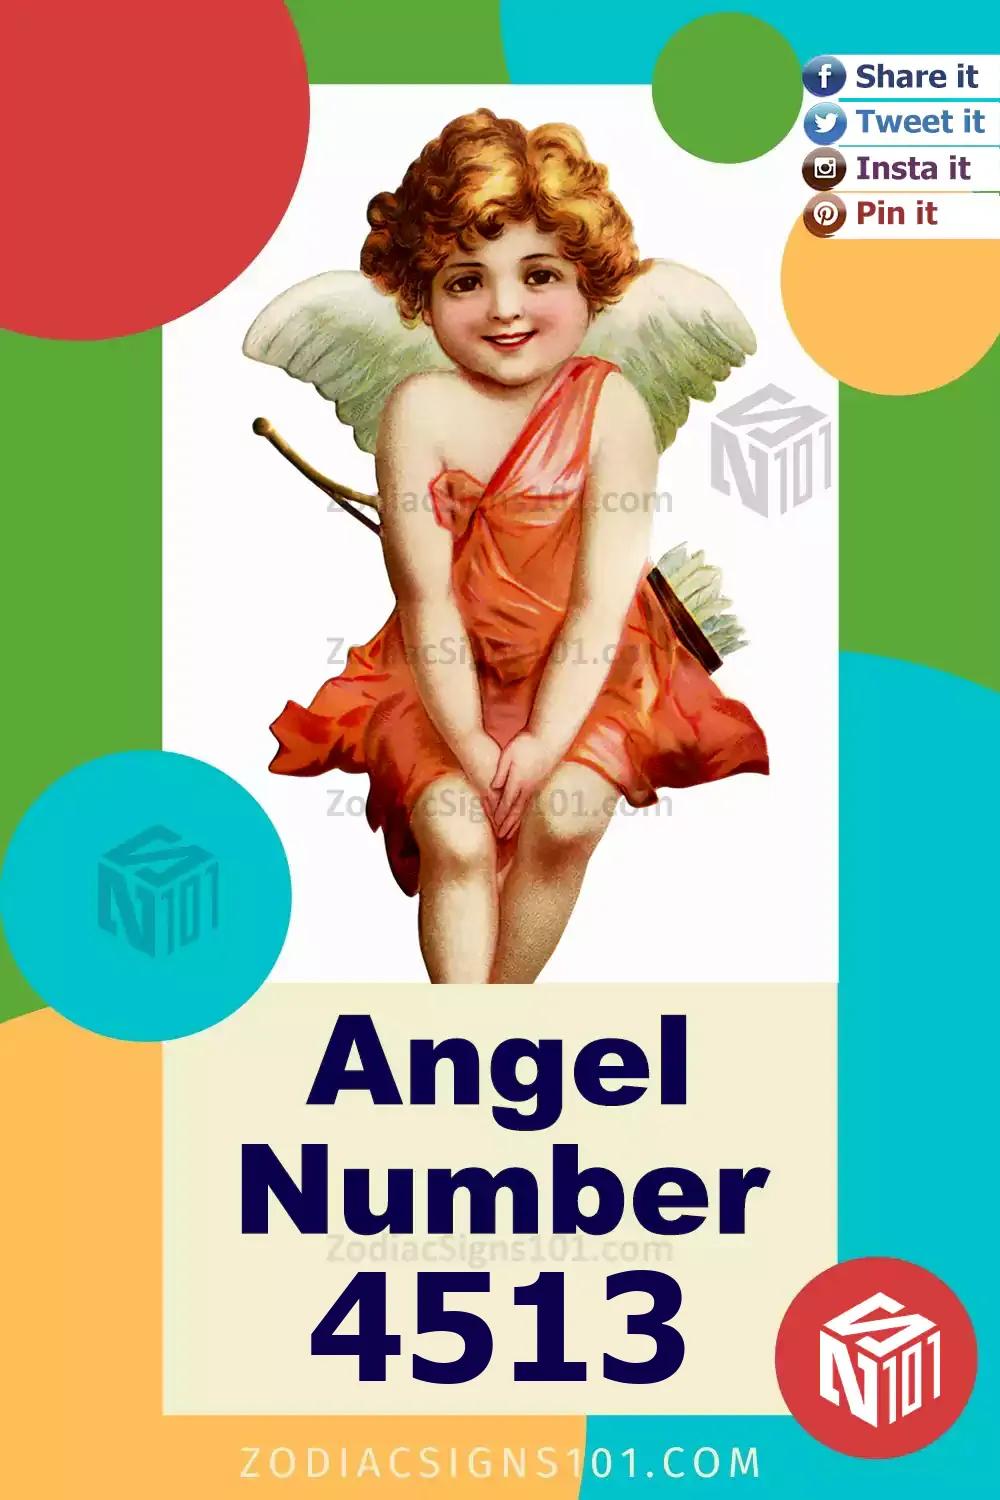 4513-Angel-Number-Meaning.jpg